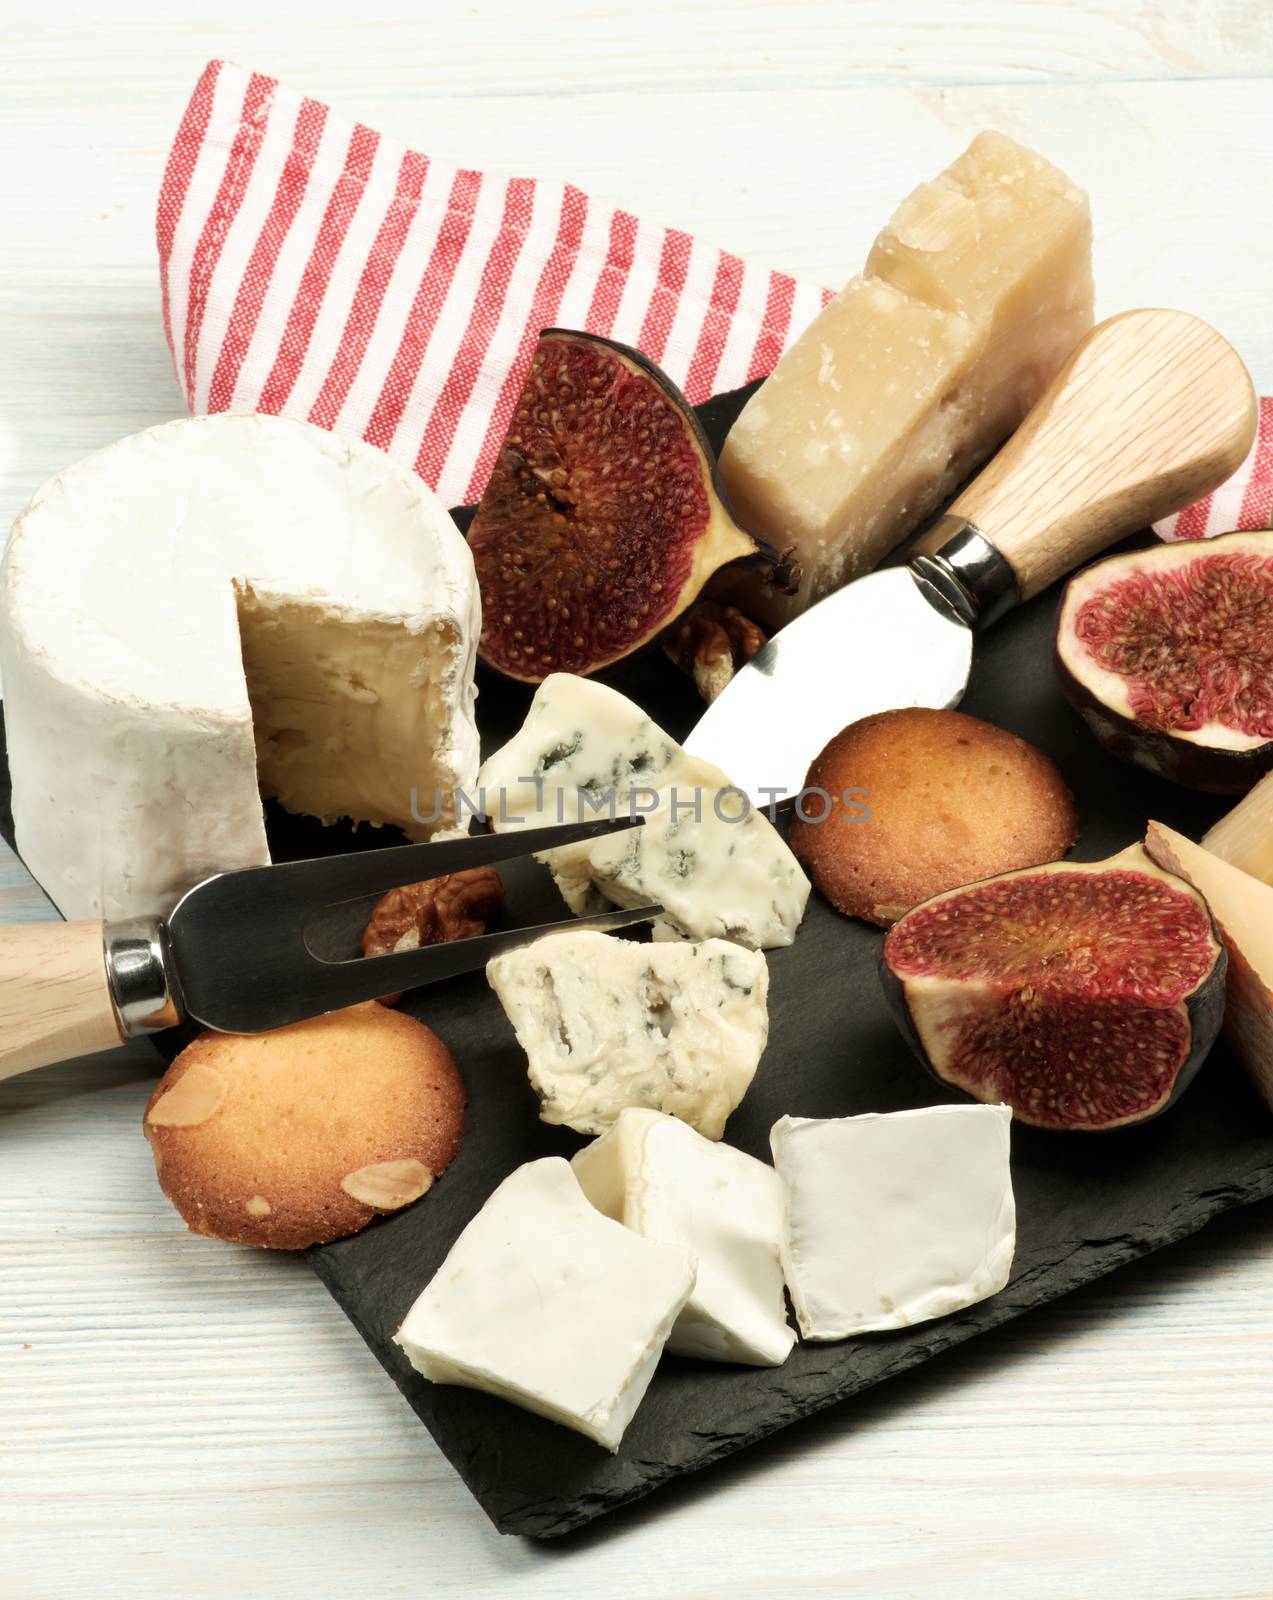 Gourmet Cheese Plate by zhekos